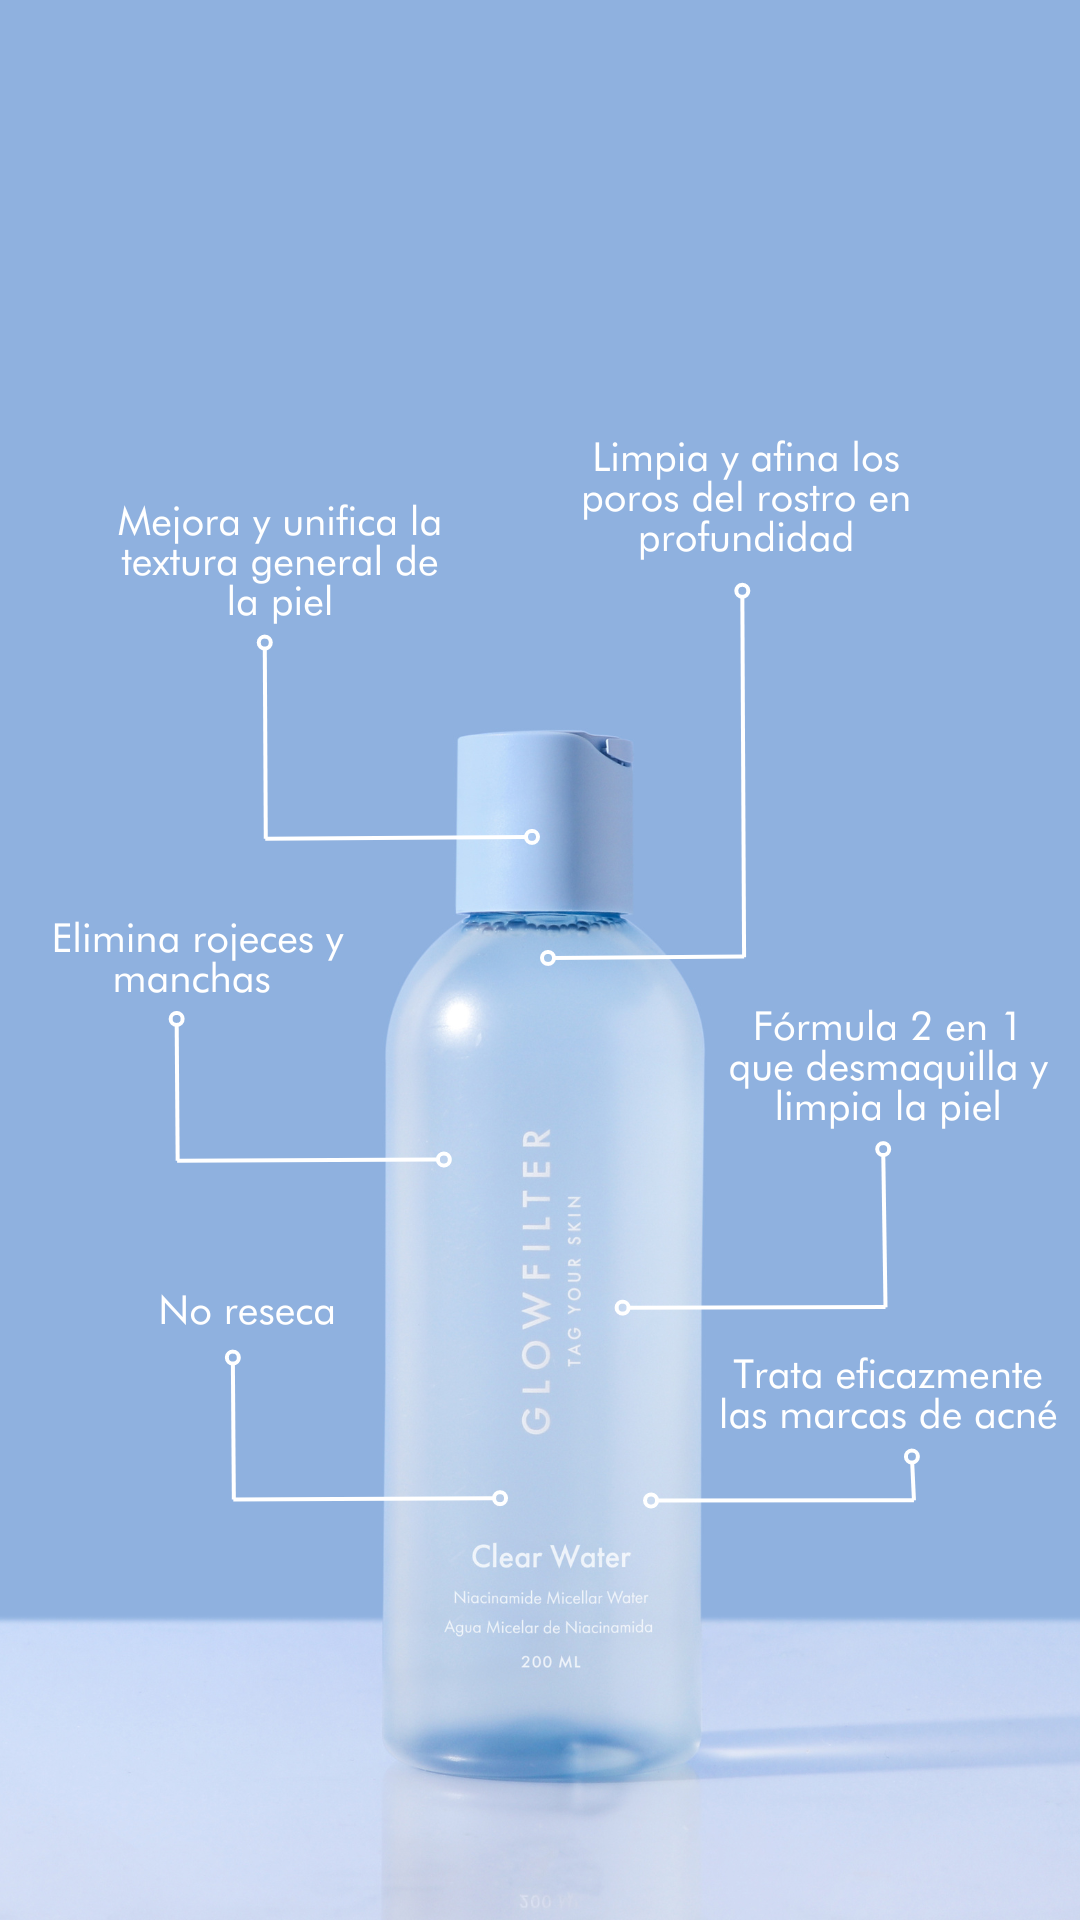 Clear Water / AGUA MICELAR DE NIACINAMIDA